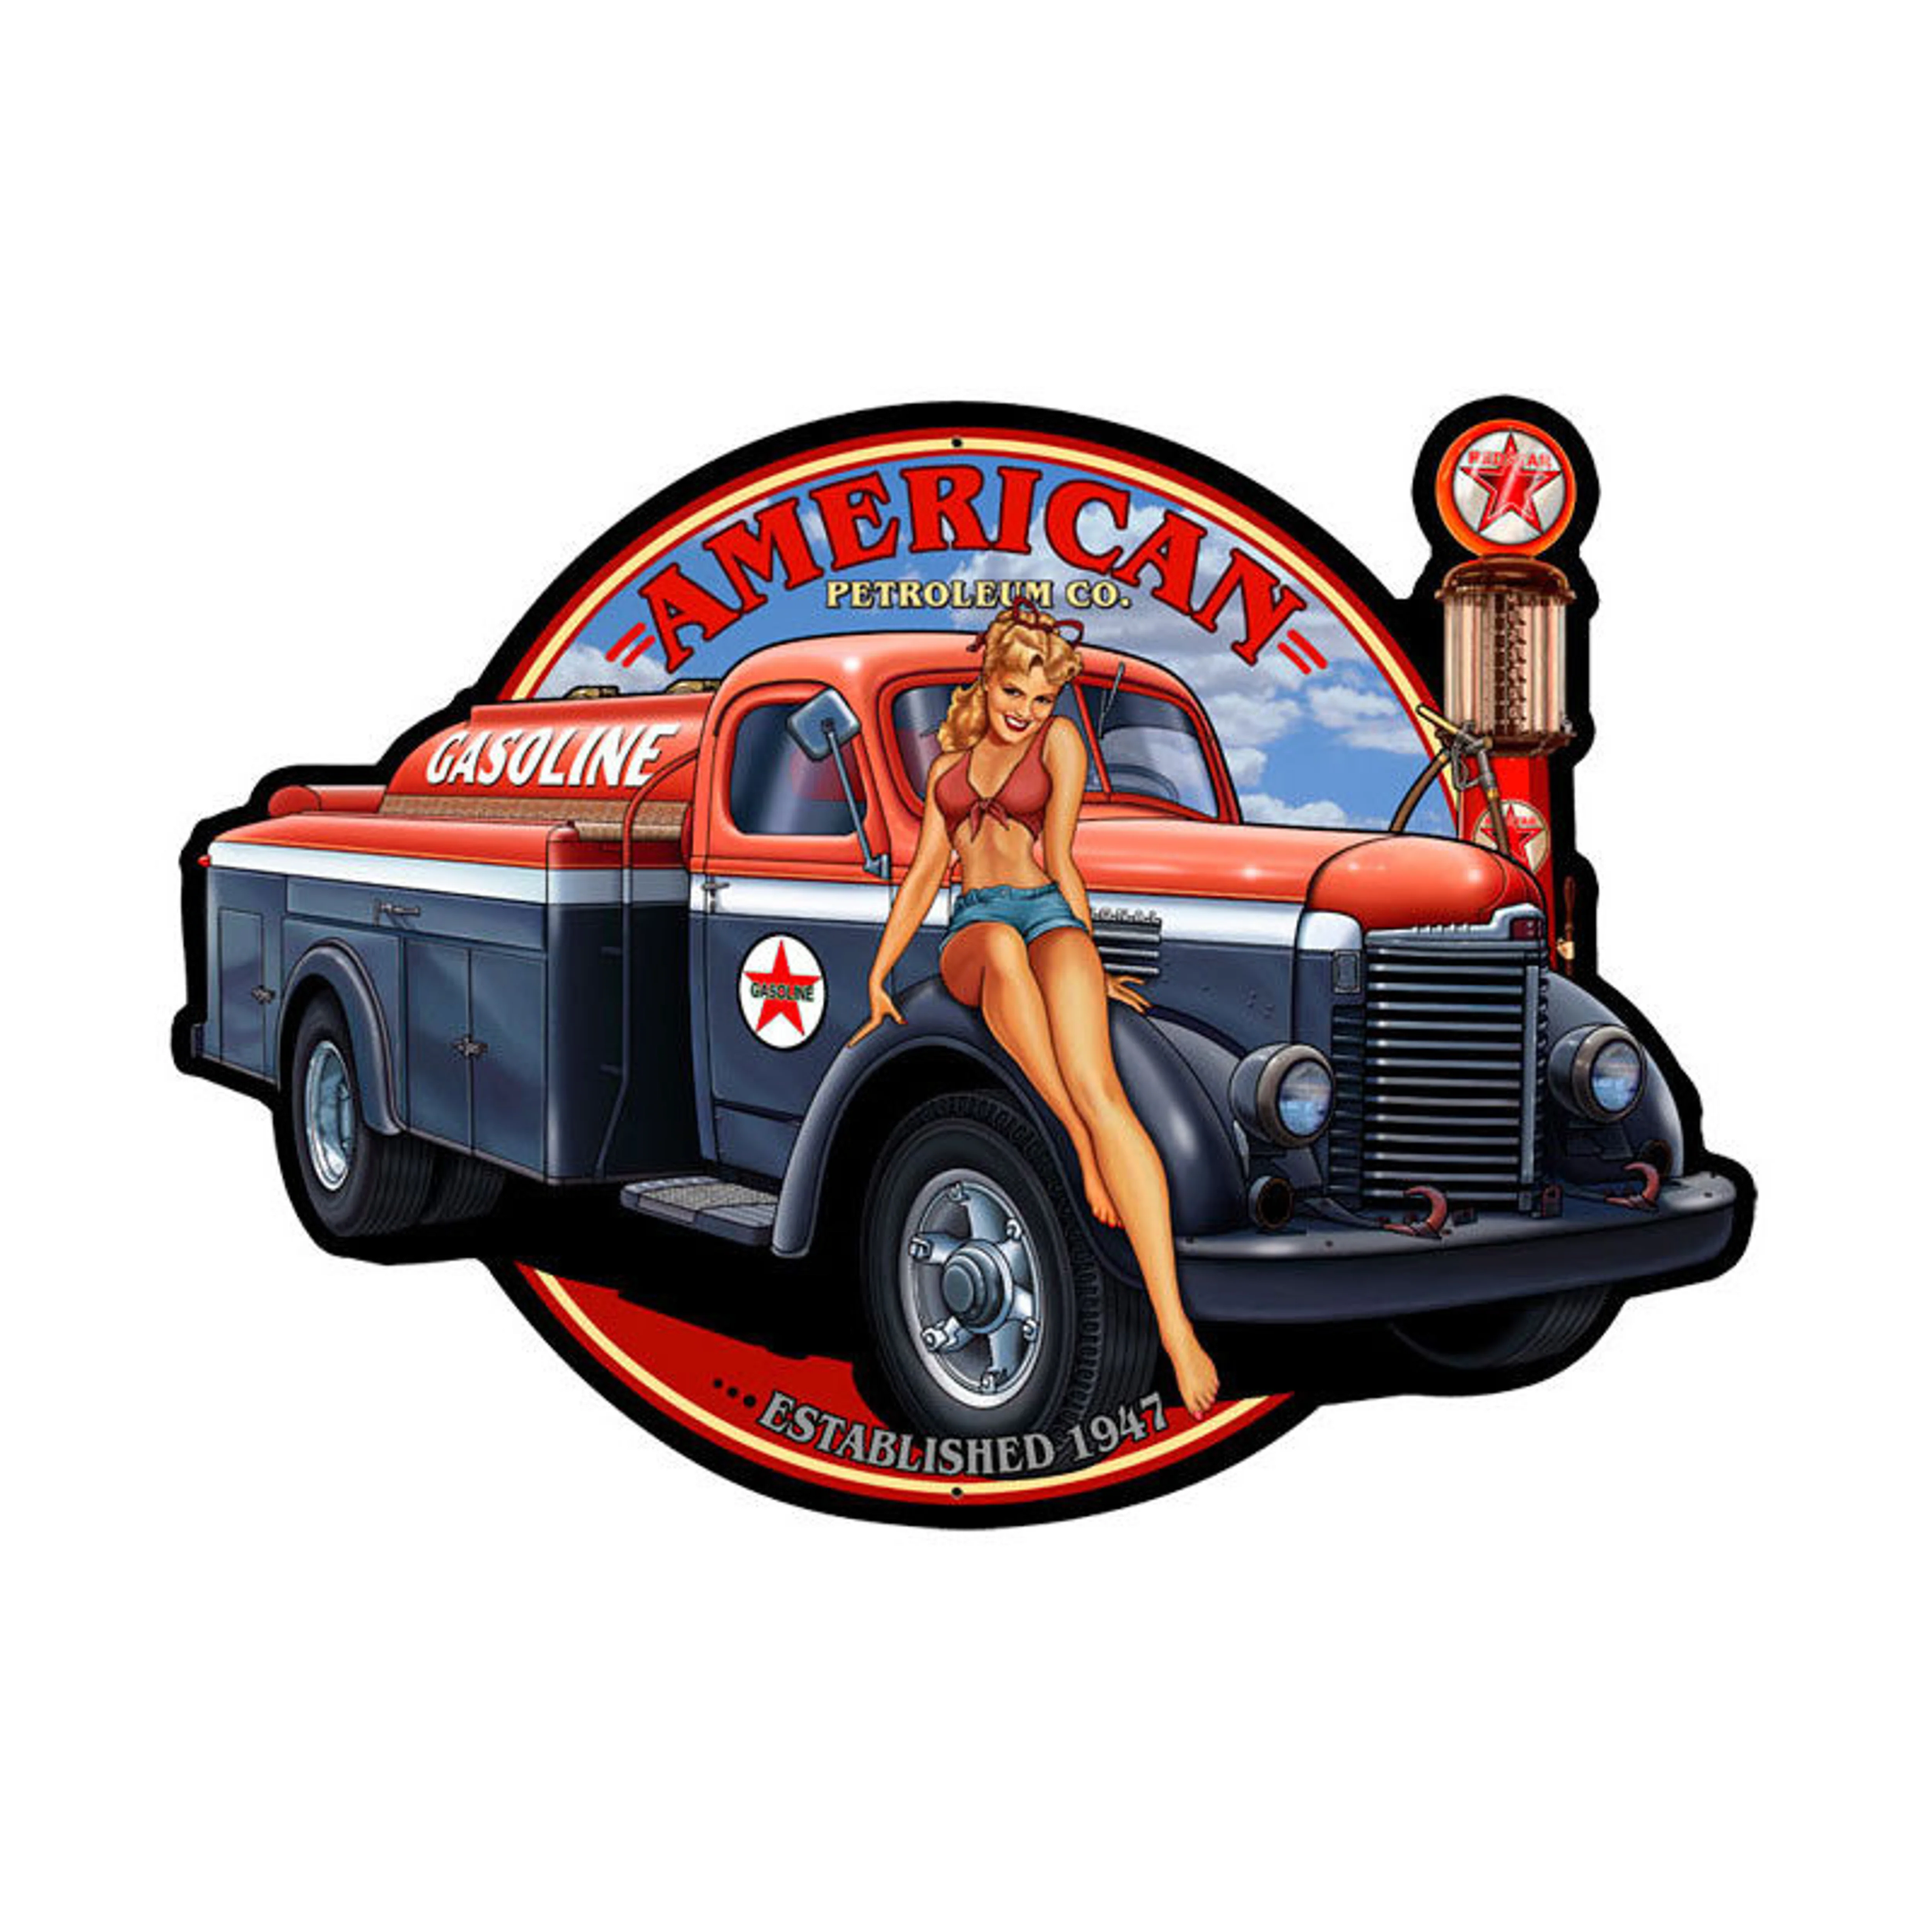 American Petroleum Pinup Girl plasma custom shape metal sign vintage style retro gas oil garage art wall decor sm284